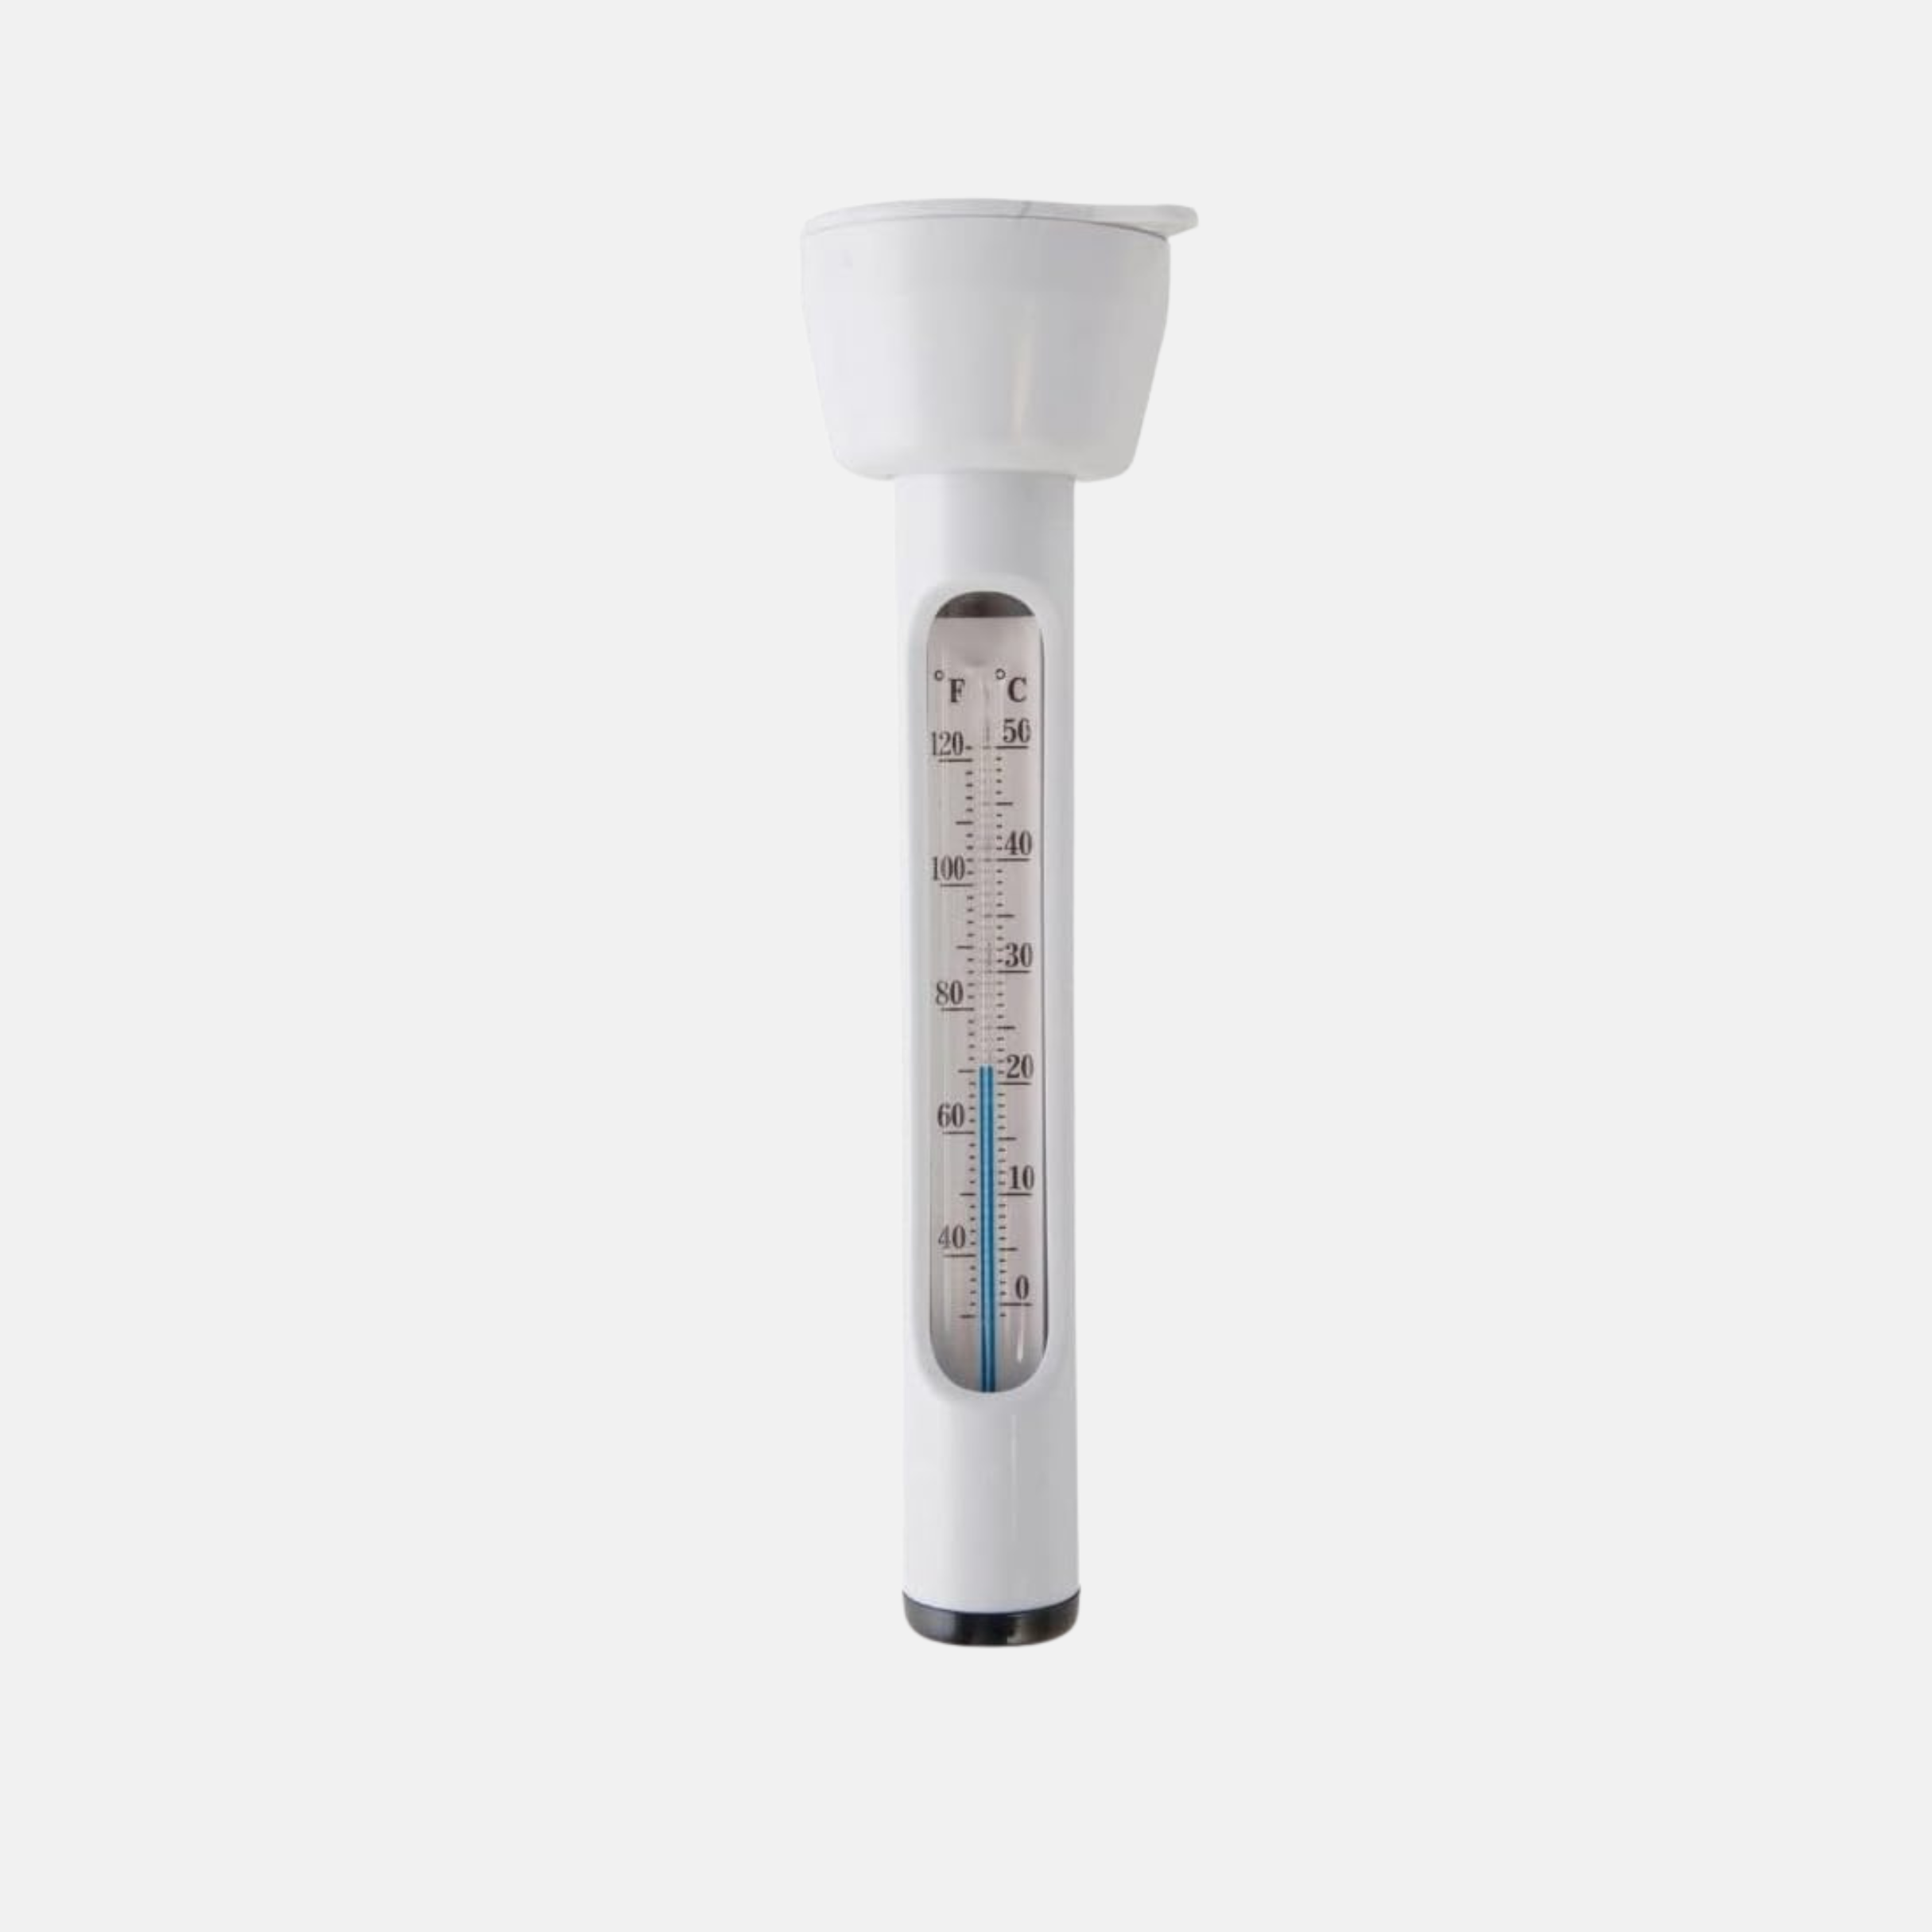 Pulsio ICE Thermometer